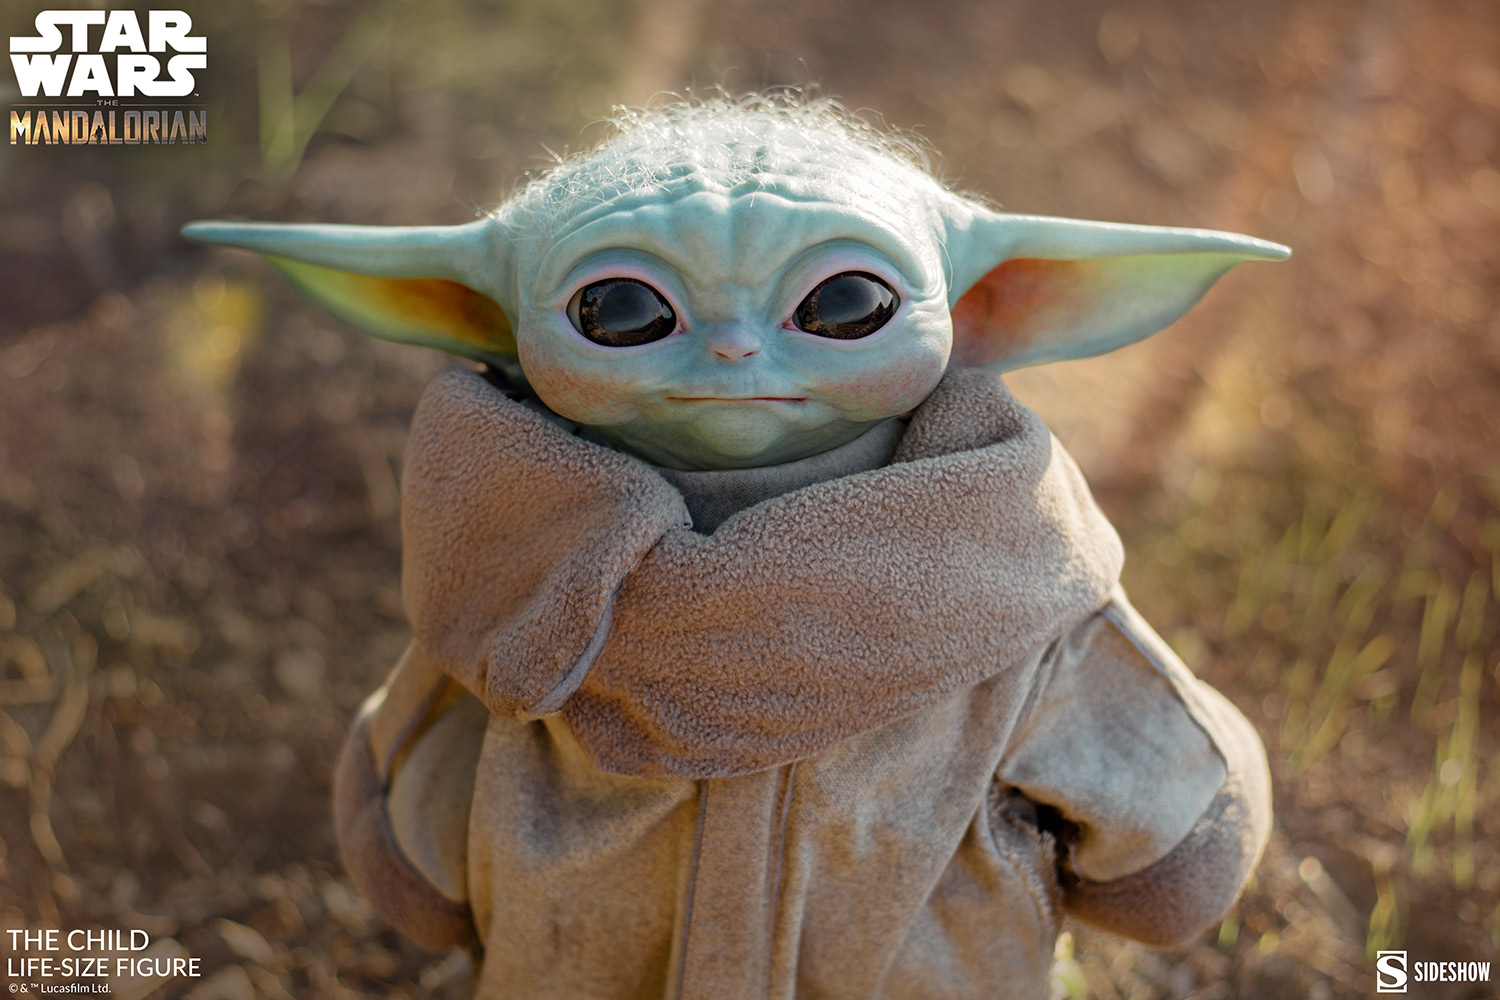 Star Wars The Mandalorian and Baby Yoda assembling figure